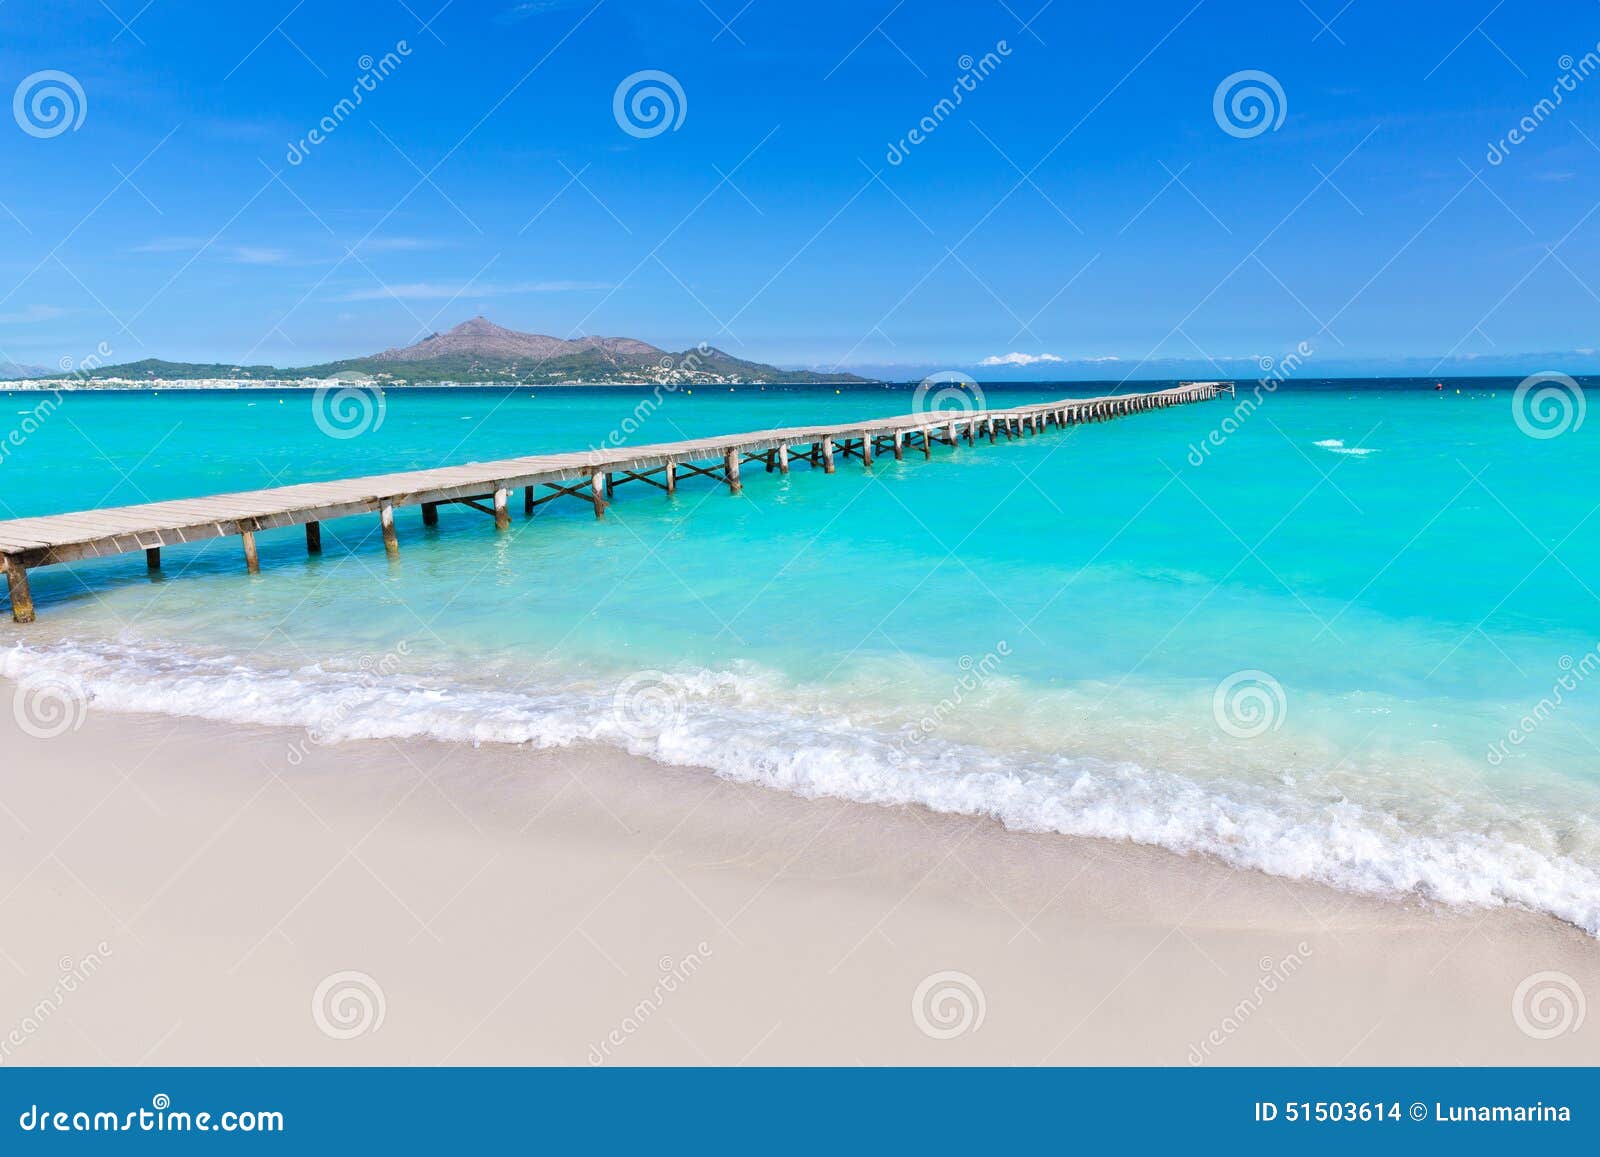 majorca platja de muro beach alcudia bay mallorca